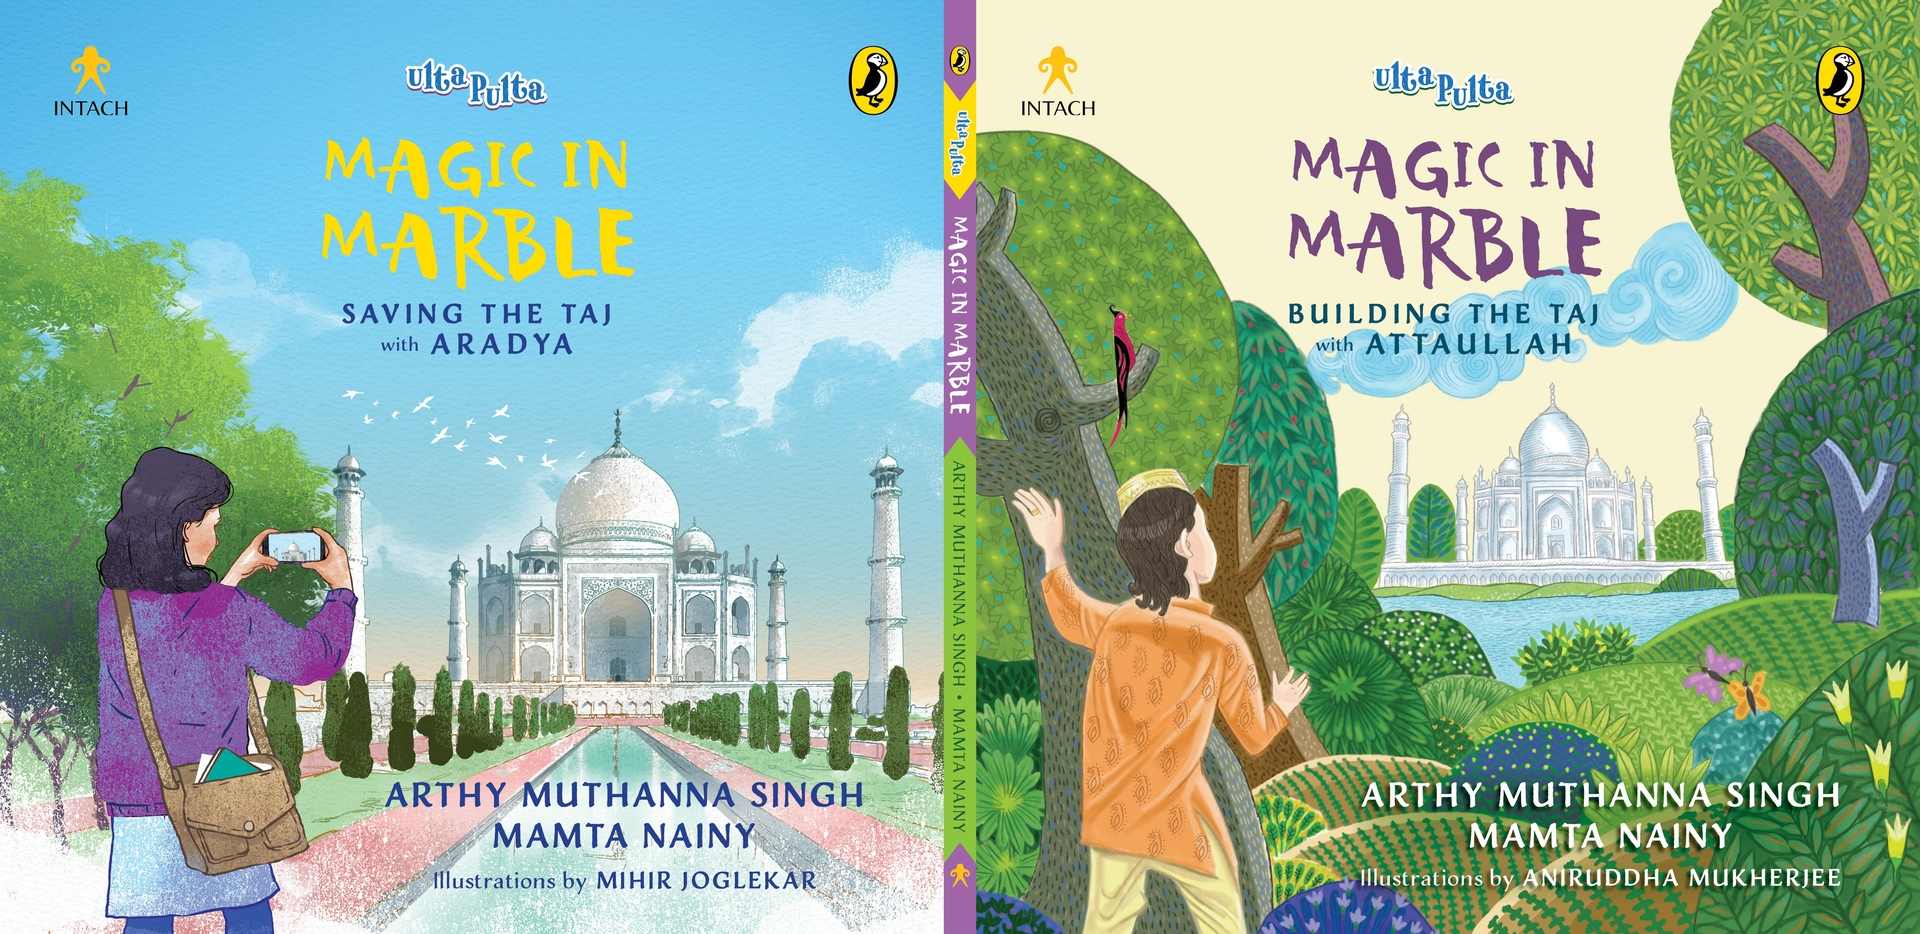 Ulta Pulta: Magic in Marble: Building the Taj With Attaullah and Saving the Taj with Aradya